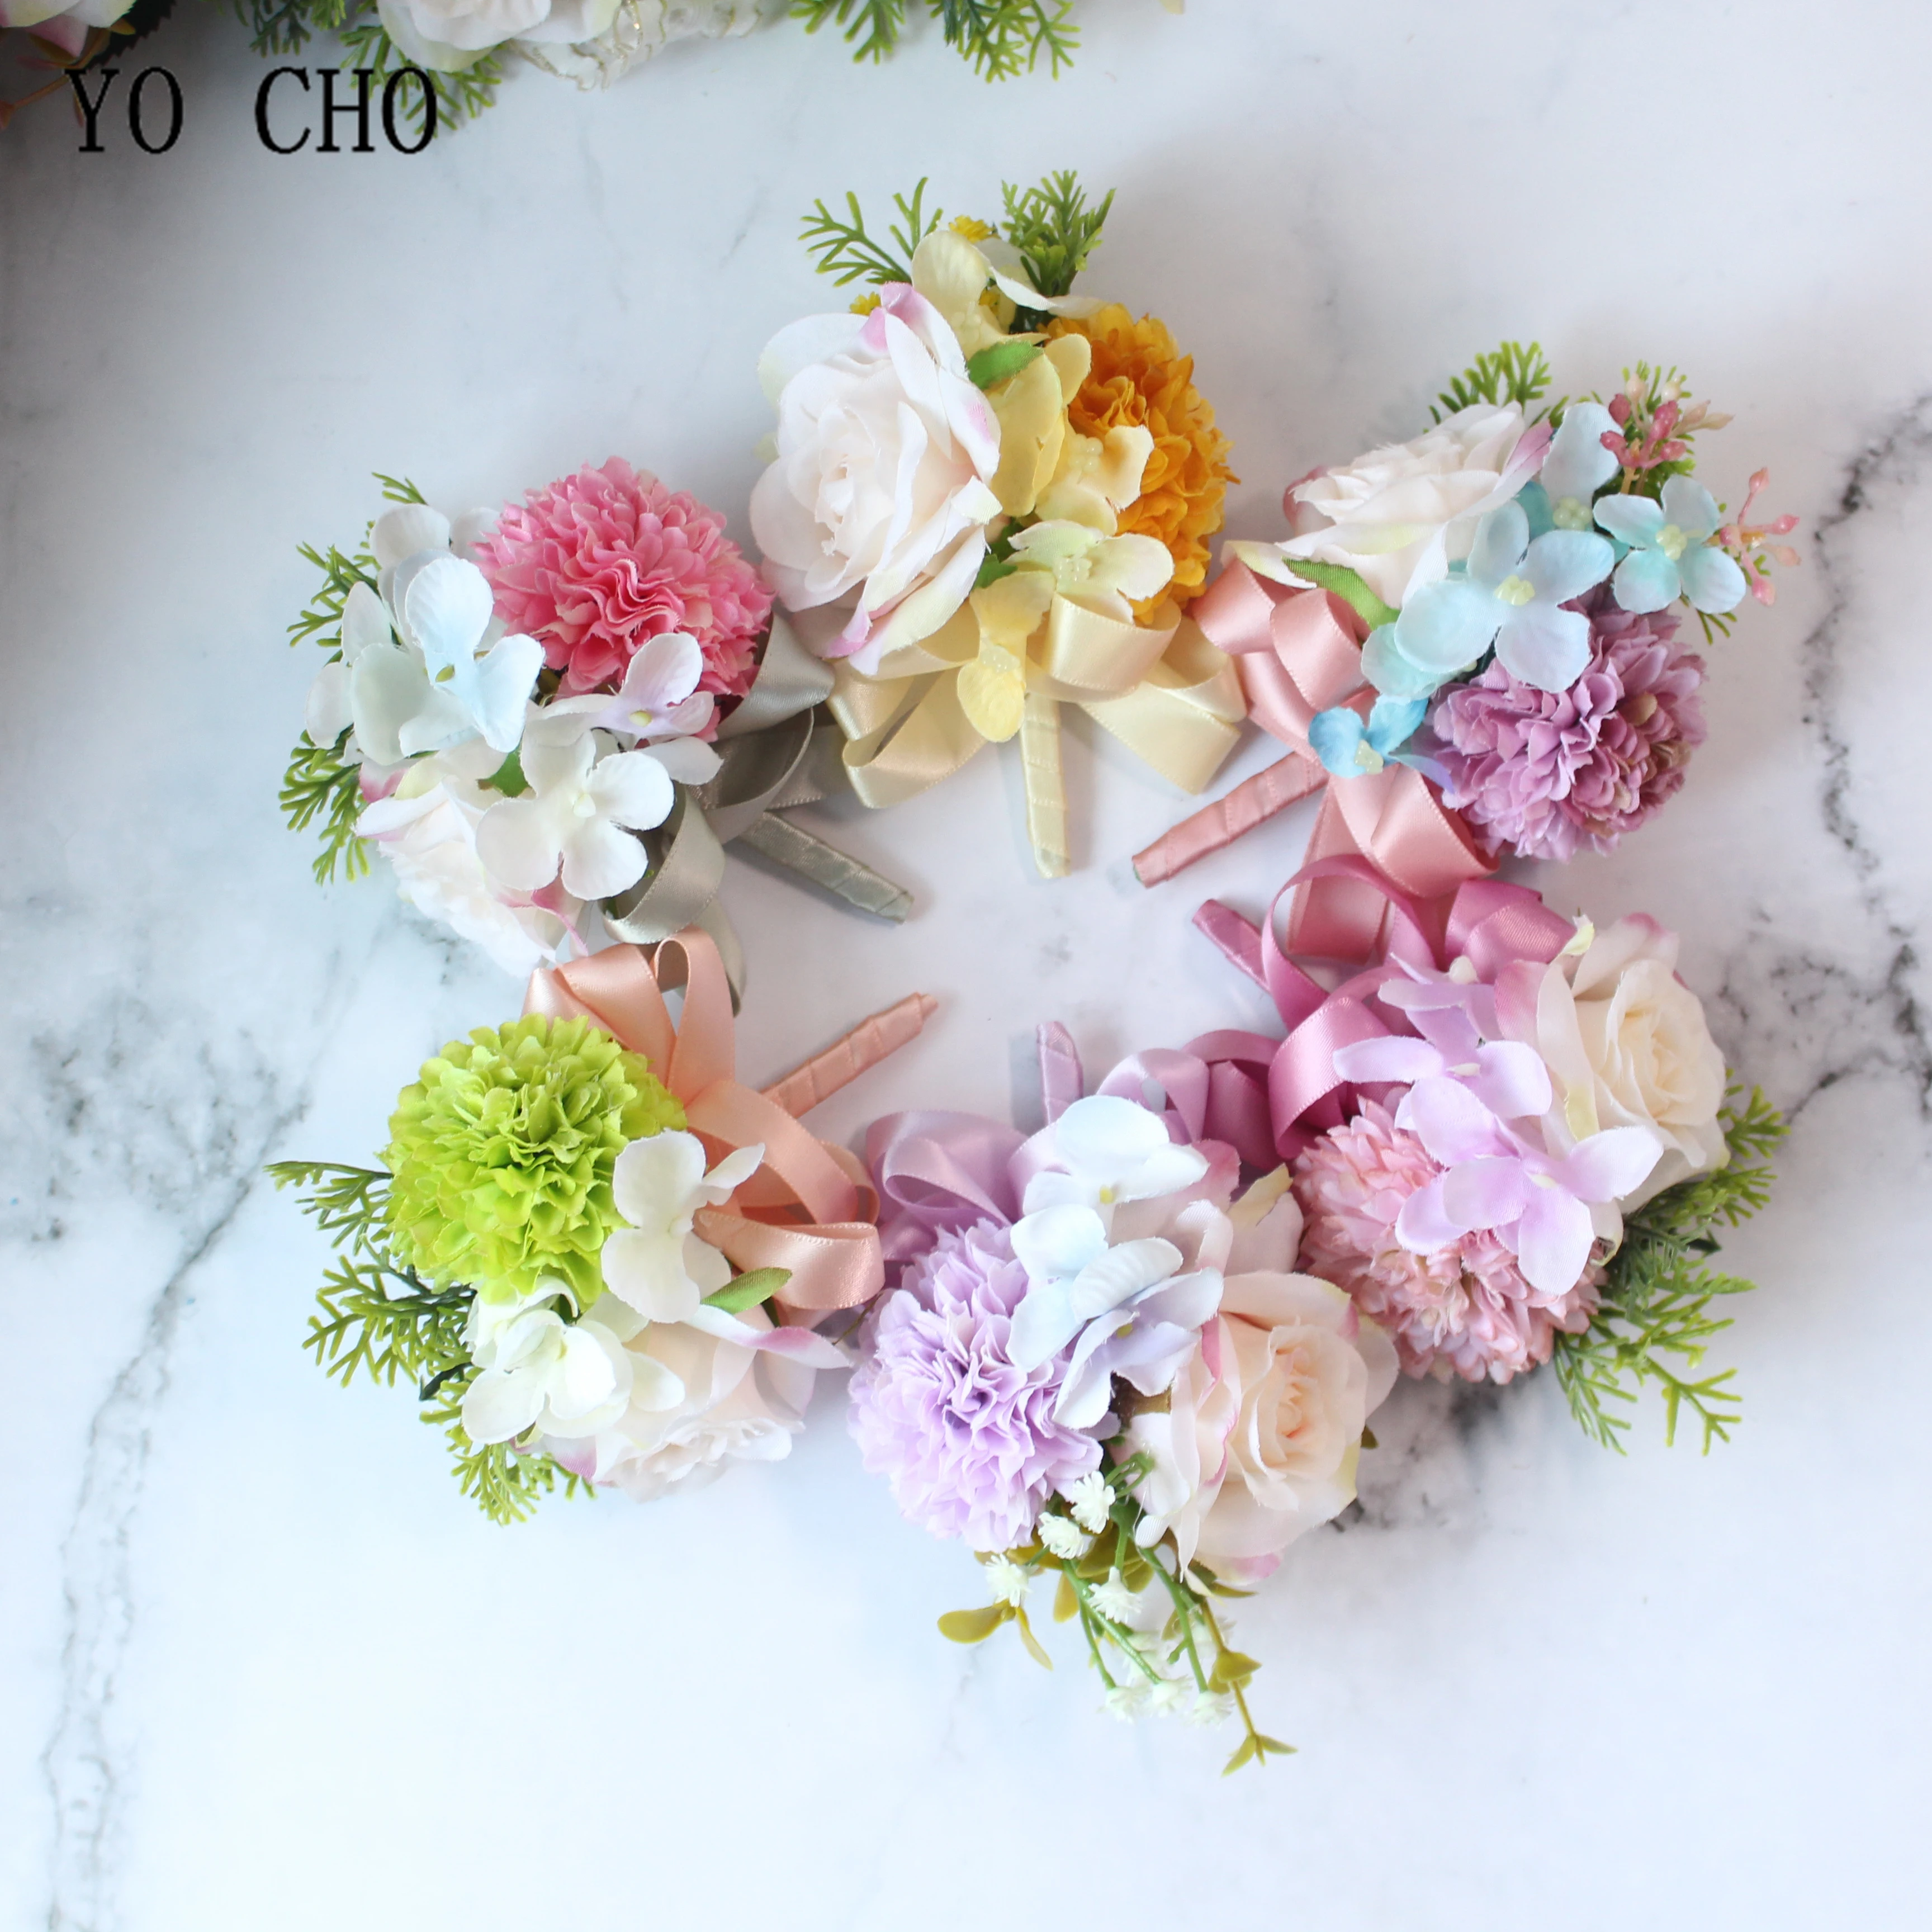 

YO CHO Wedding Flower Groom Boutonniere Brooch Bride Wrist Corsage Bracelet Silk Rose Man Suit Prom Party Decor Photography Prop